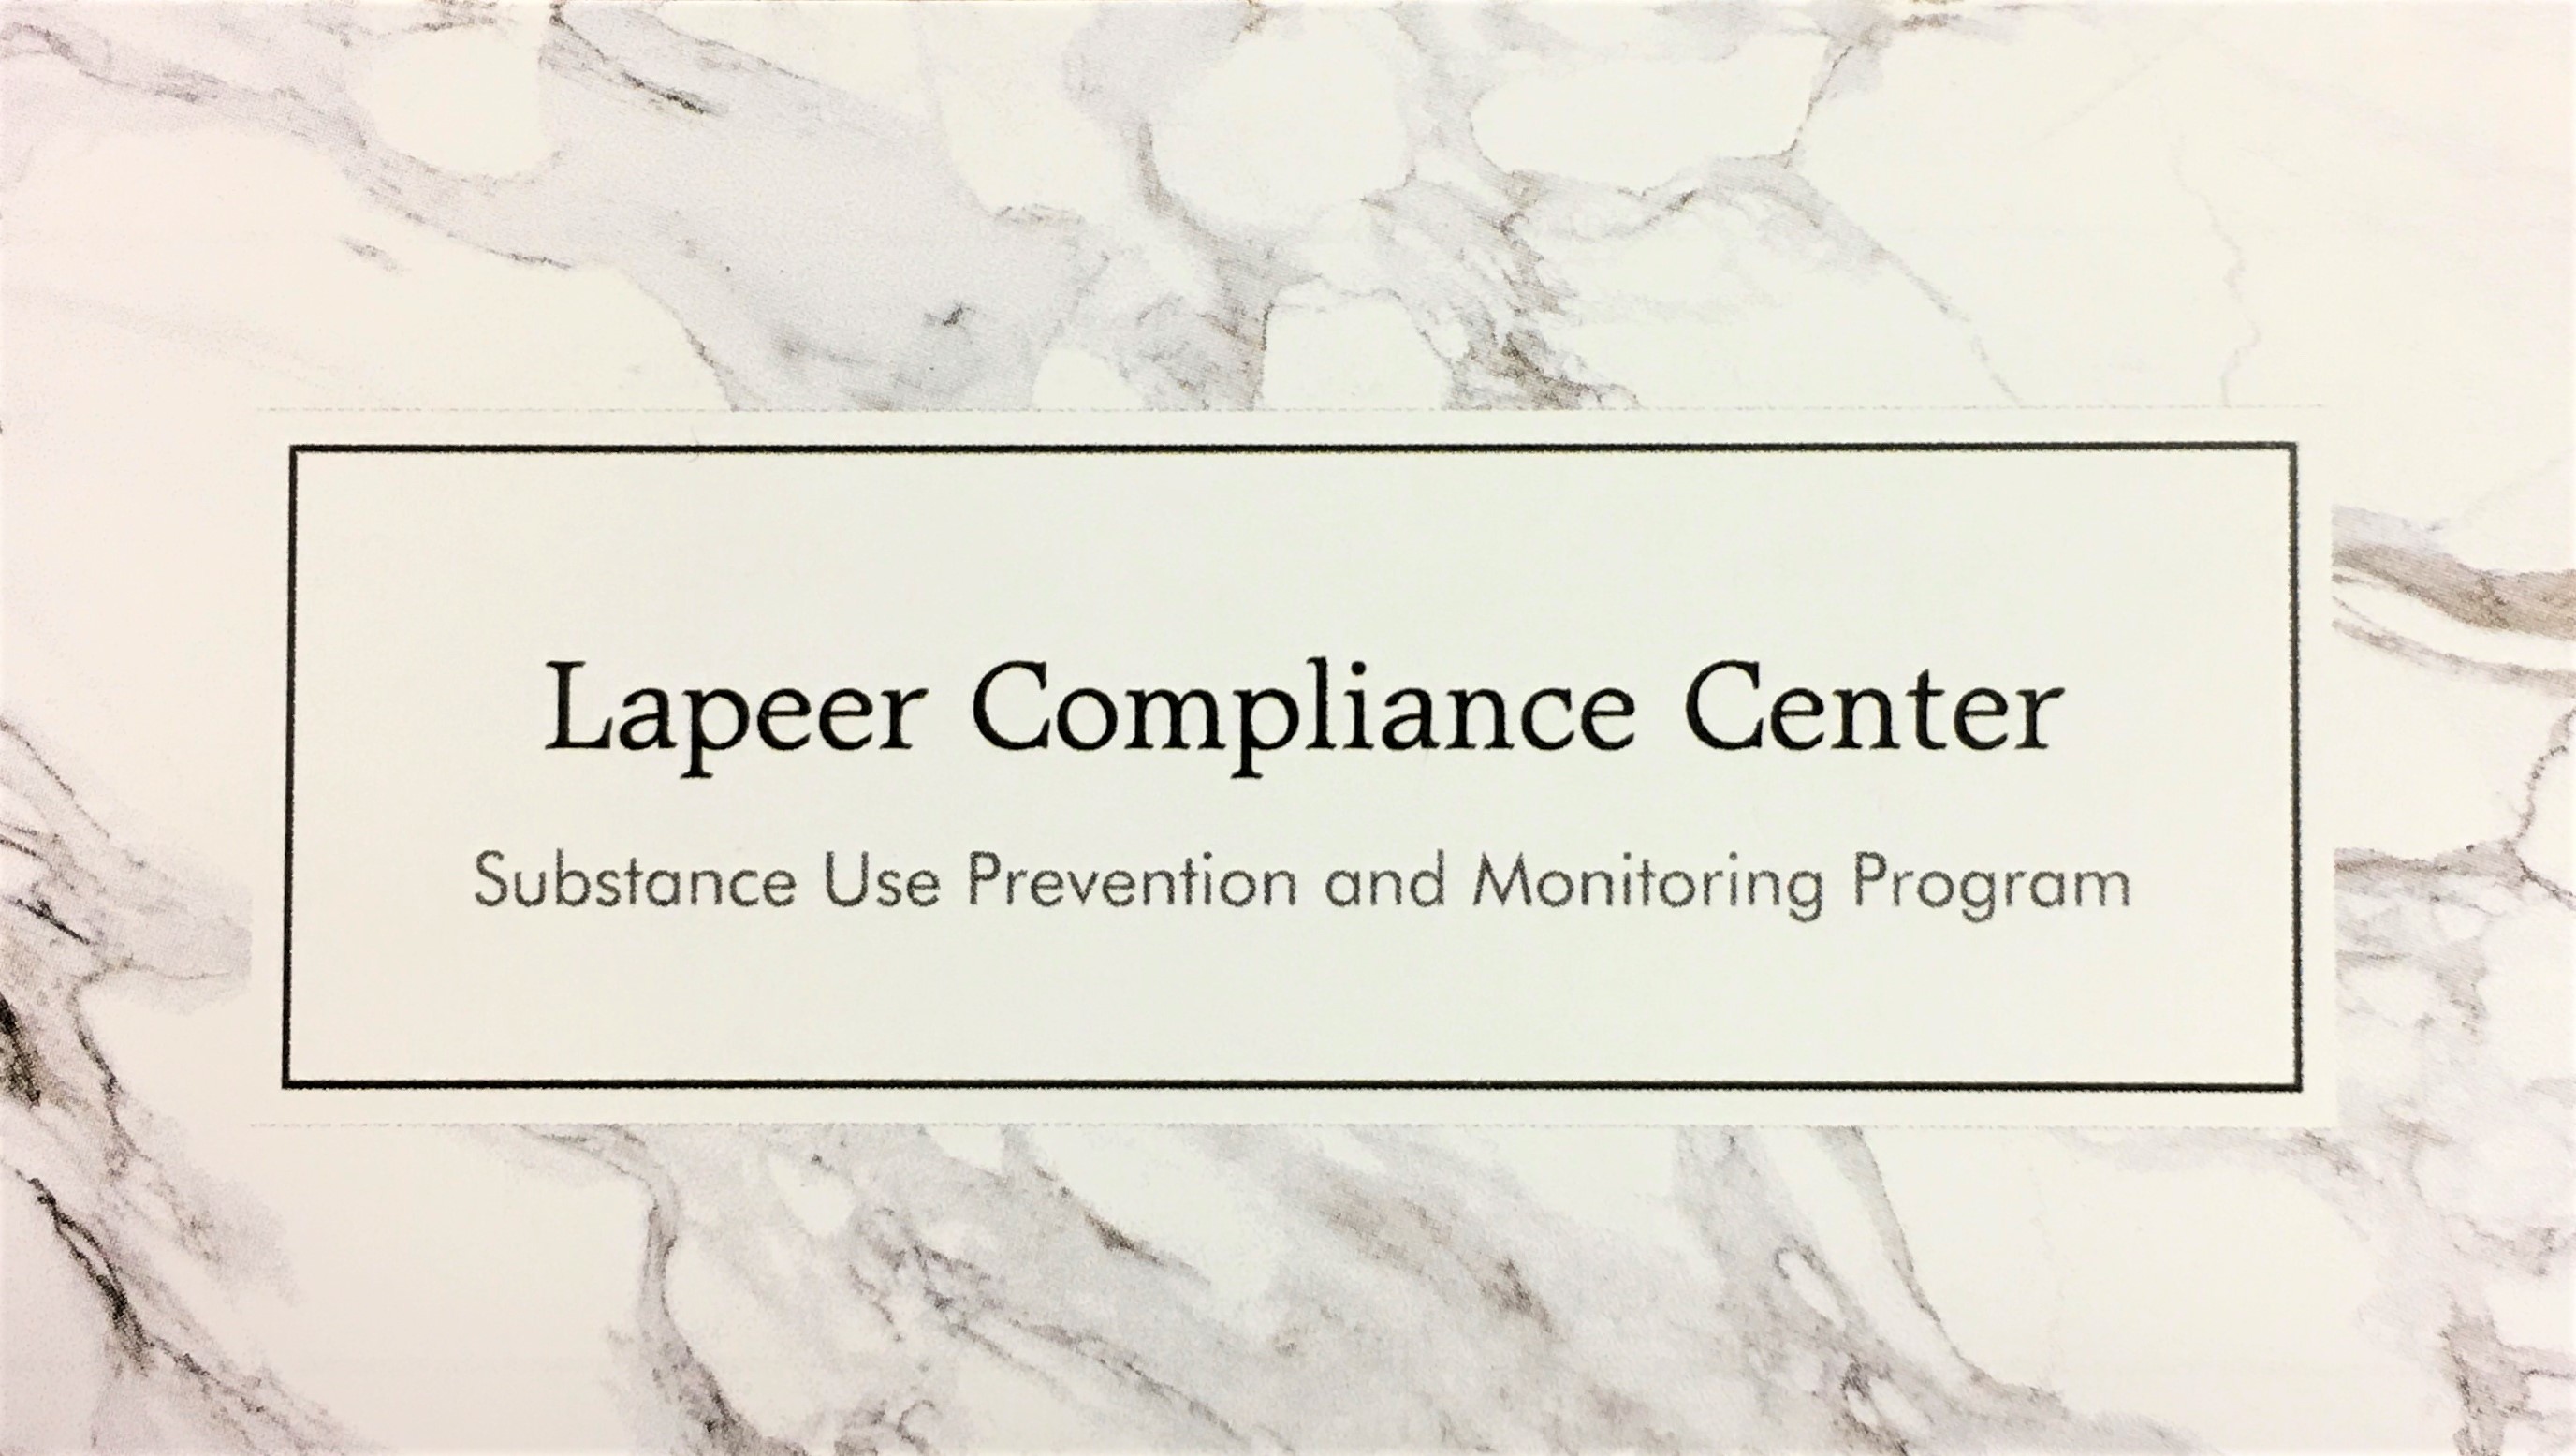 ***Lapeer Compliance Center, LLC Photo